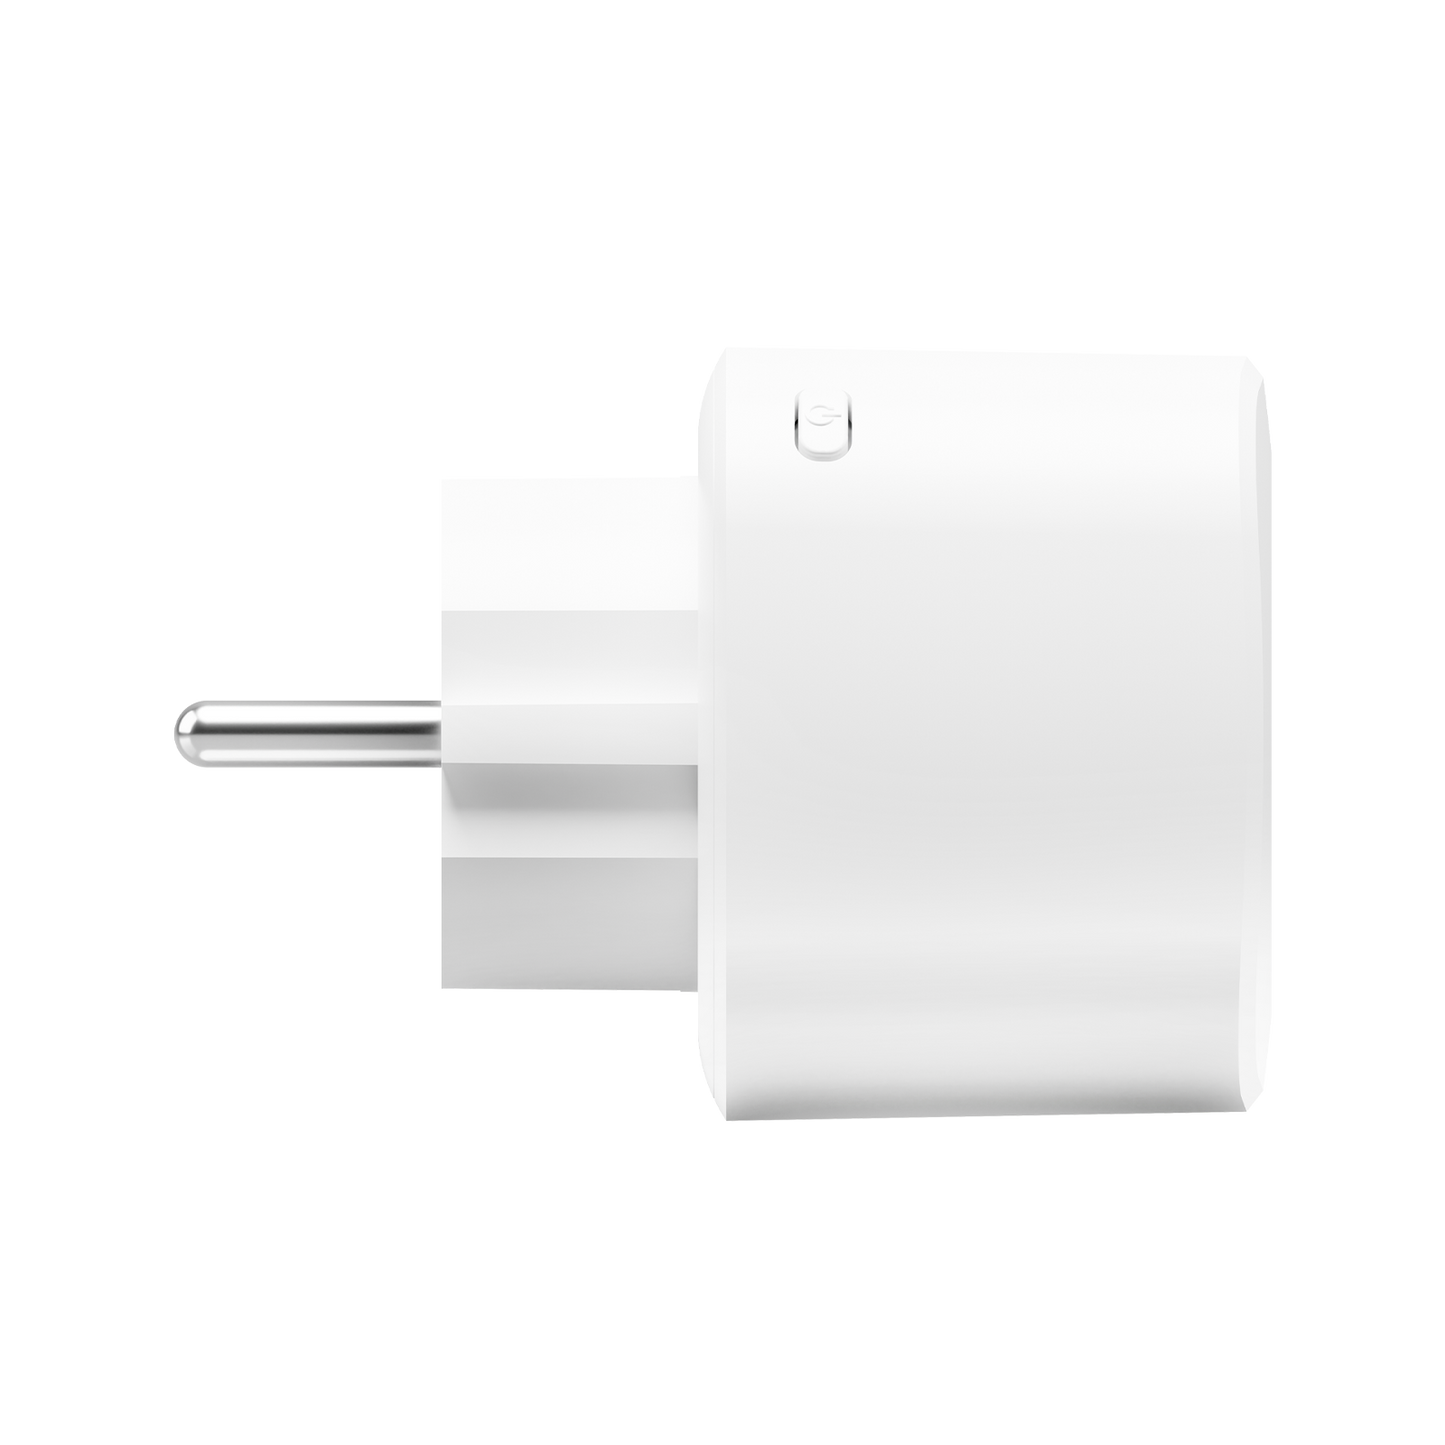 Tesla Smart Plug